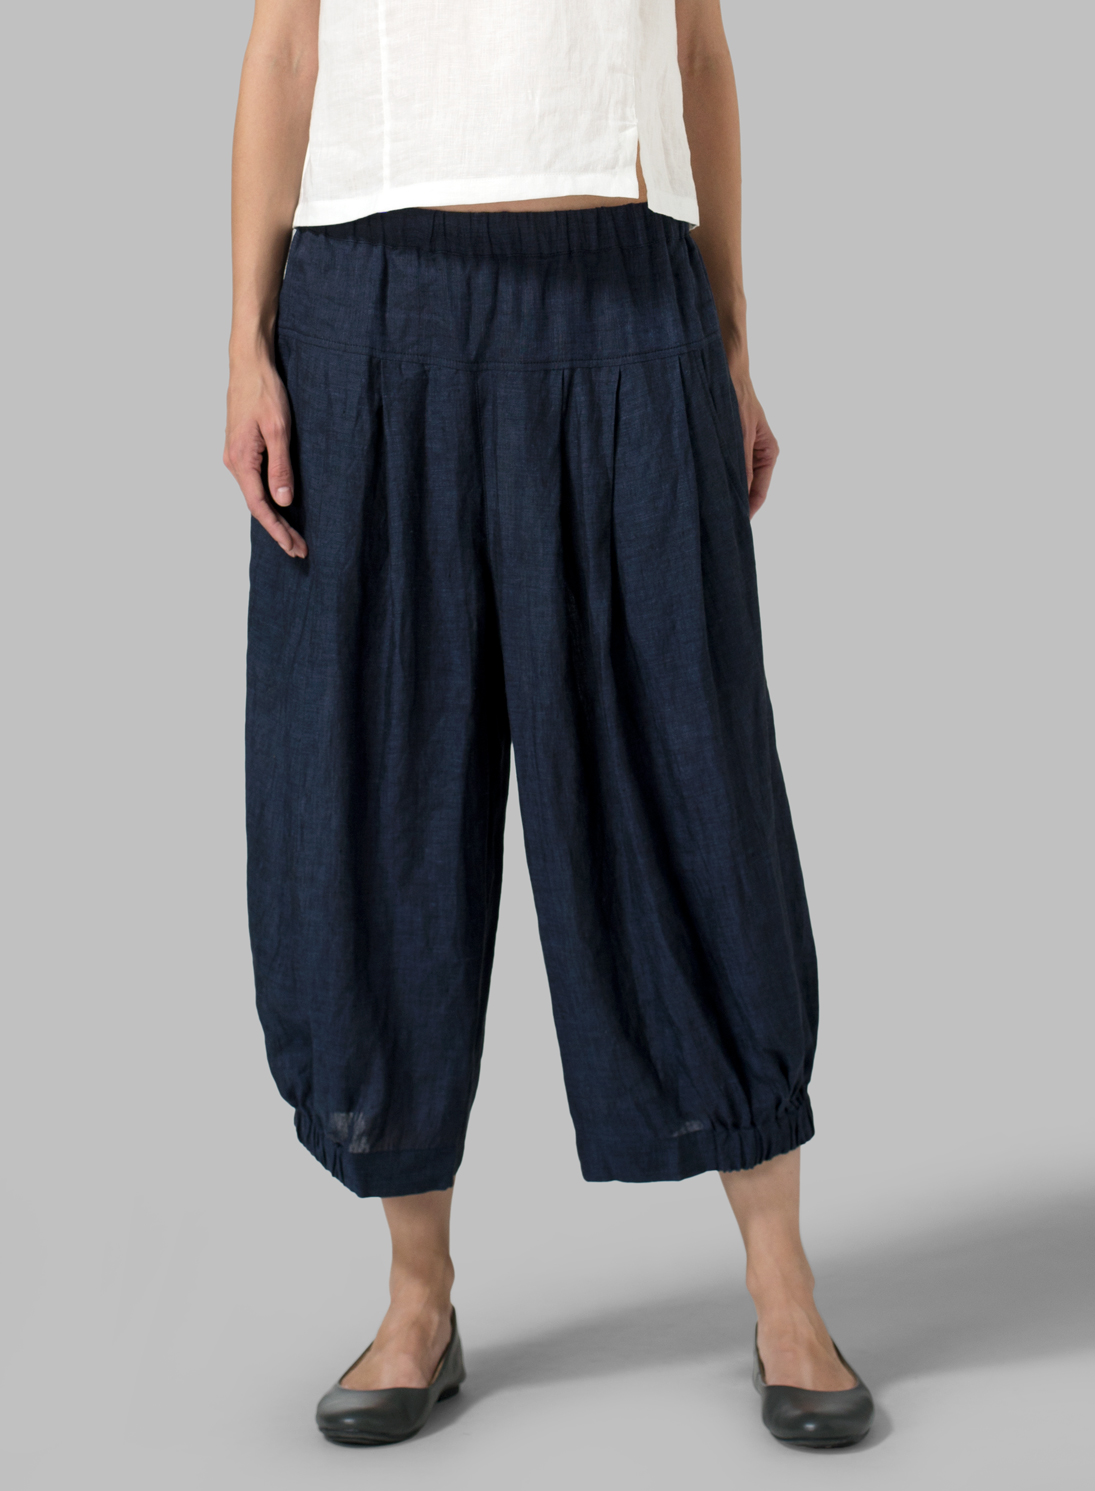 Harem Pants Women - Casual Women Vintage Pants Plus Large Size Linen Cotton  Pants Spring Autumn Thick Trousers For Ladies Femme Quality Pants,Navy  Blue,S price in UAE,  UAE